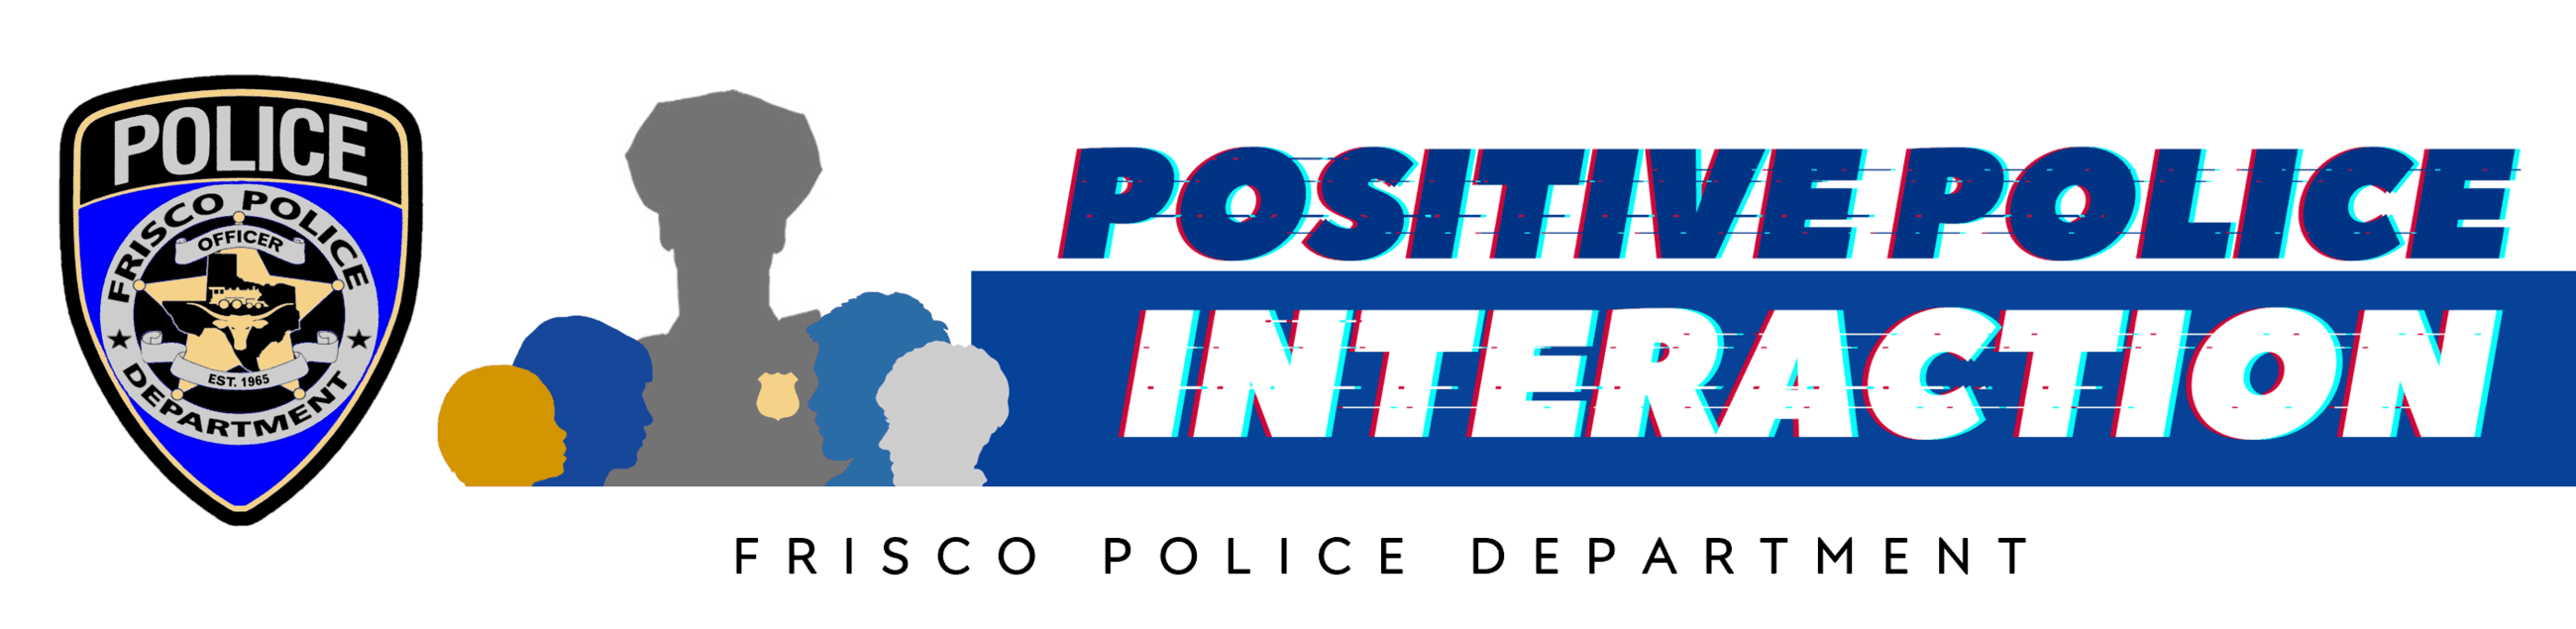 Positive Police Interaction Header